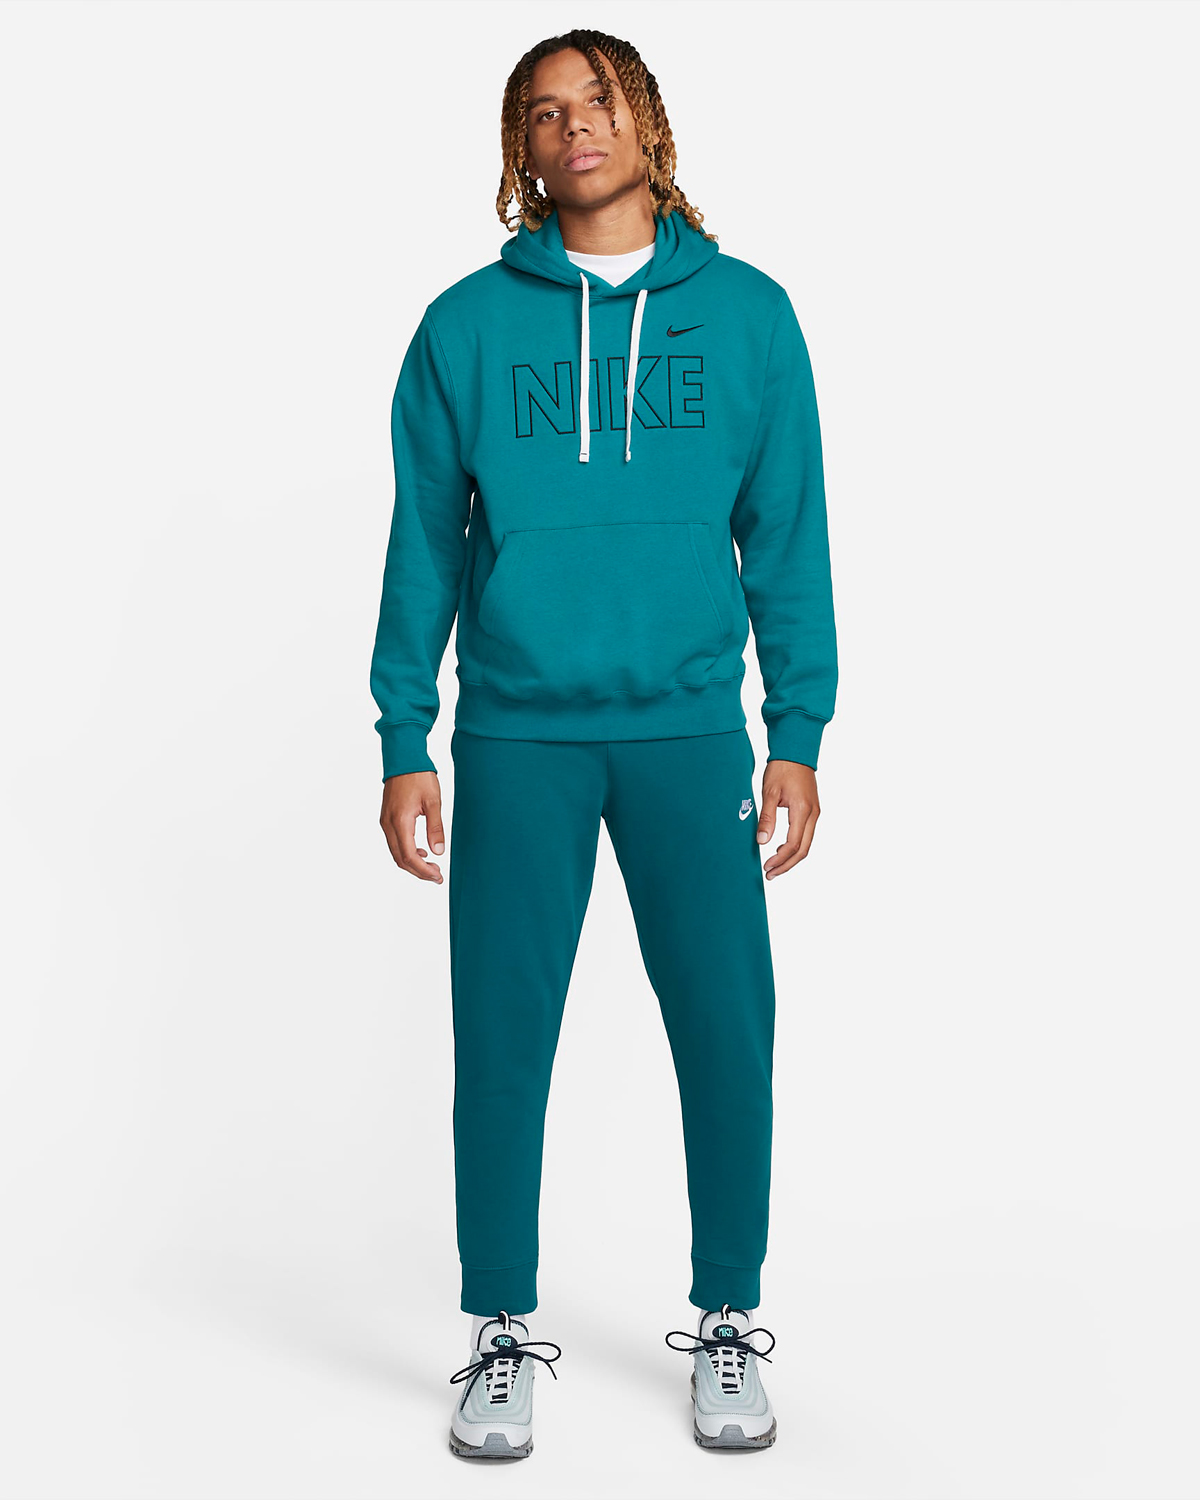 Nike-Club-Fleece-Graphic-Hoodie-Geode-Teal-Outfit